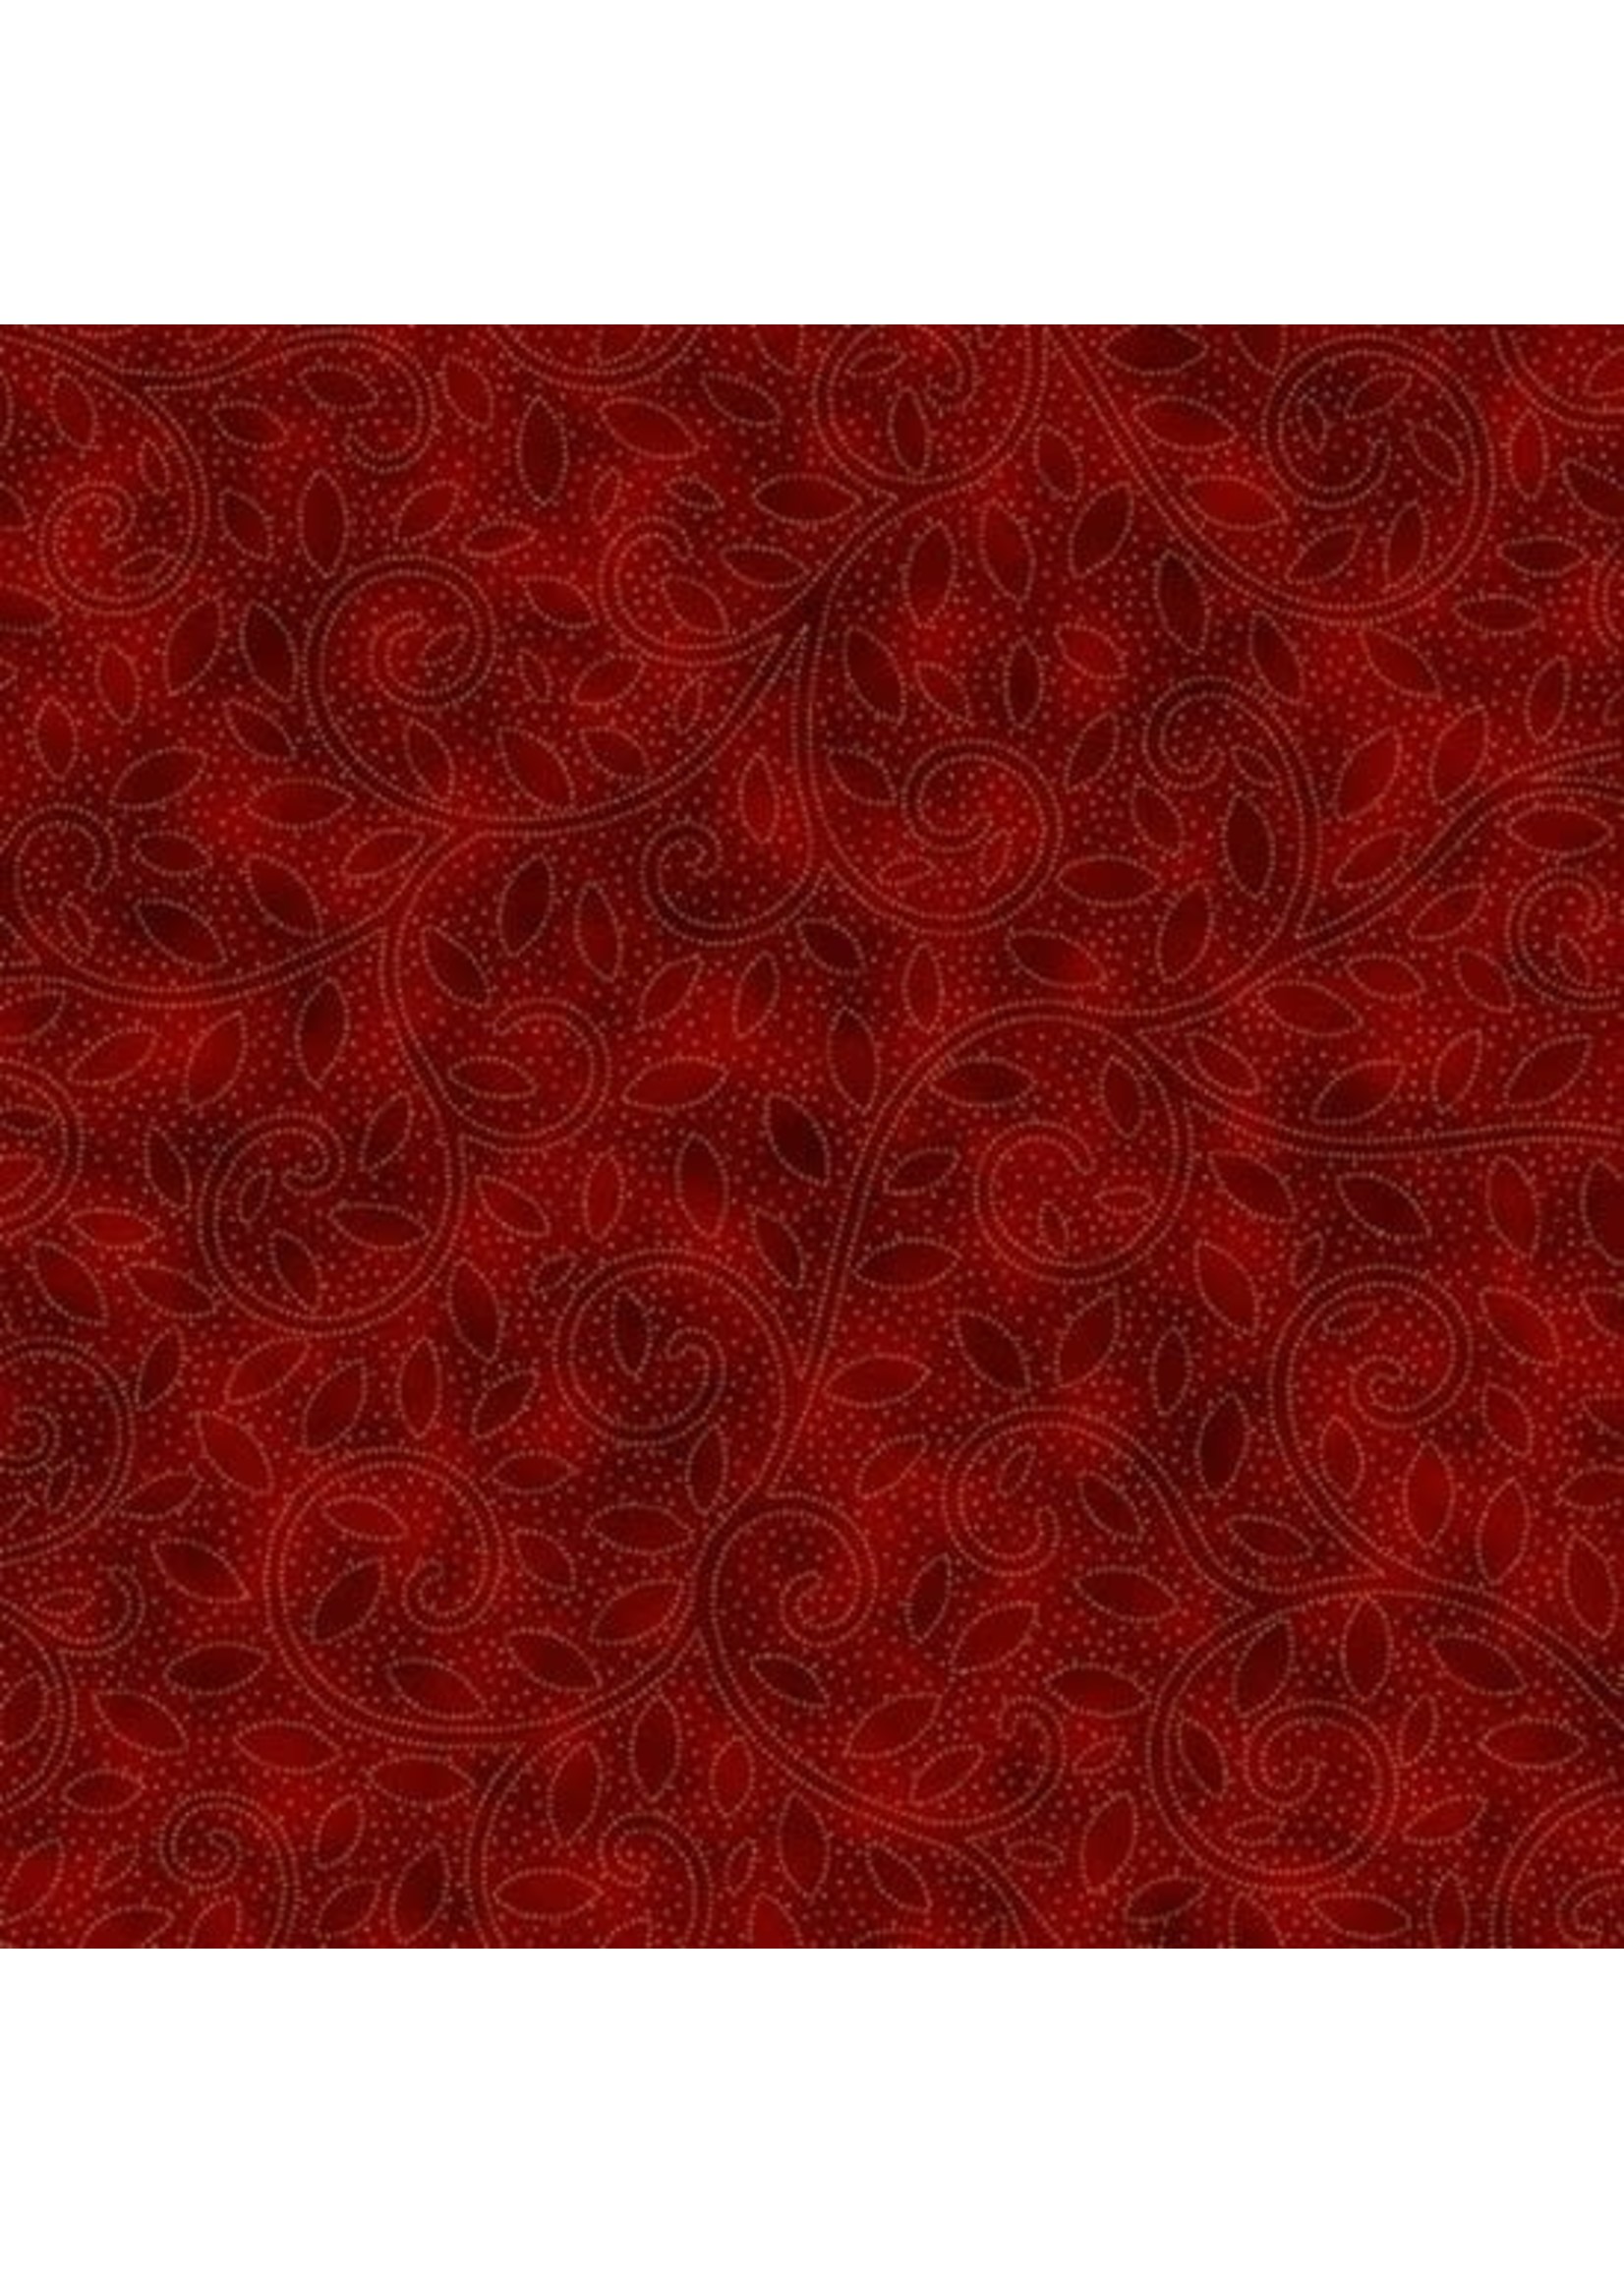 Hoffman Fabrics Fall for Autumn - Crimson Gold - U4989 - 10G